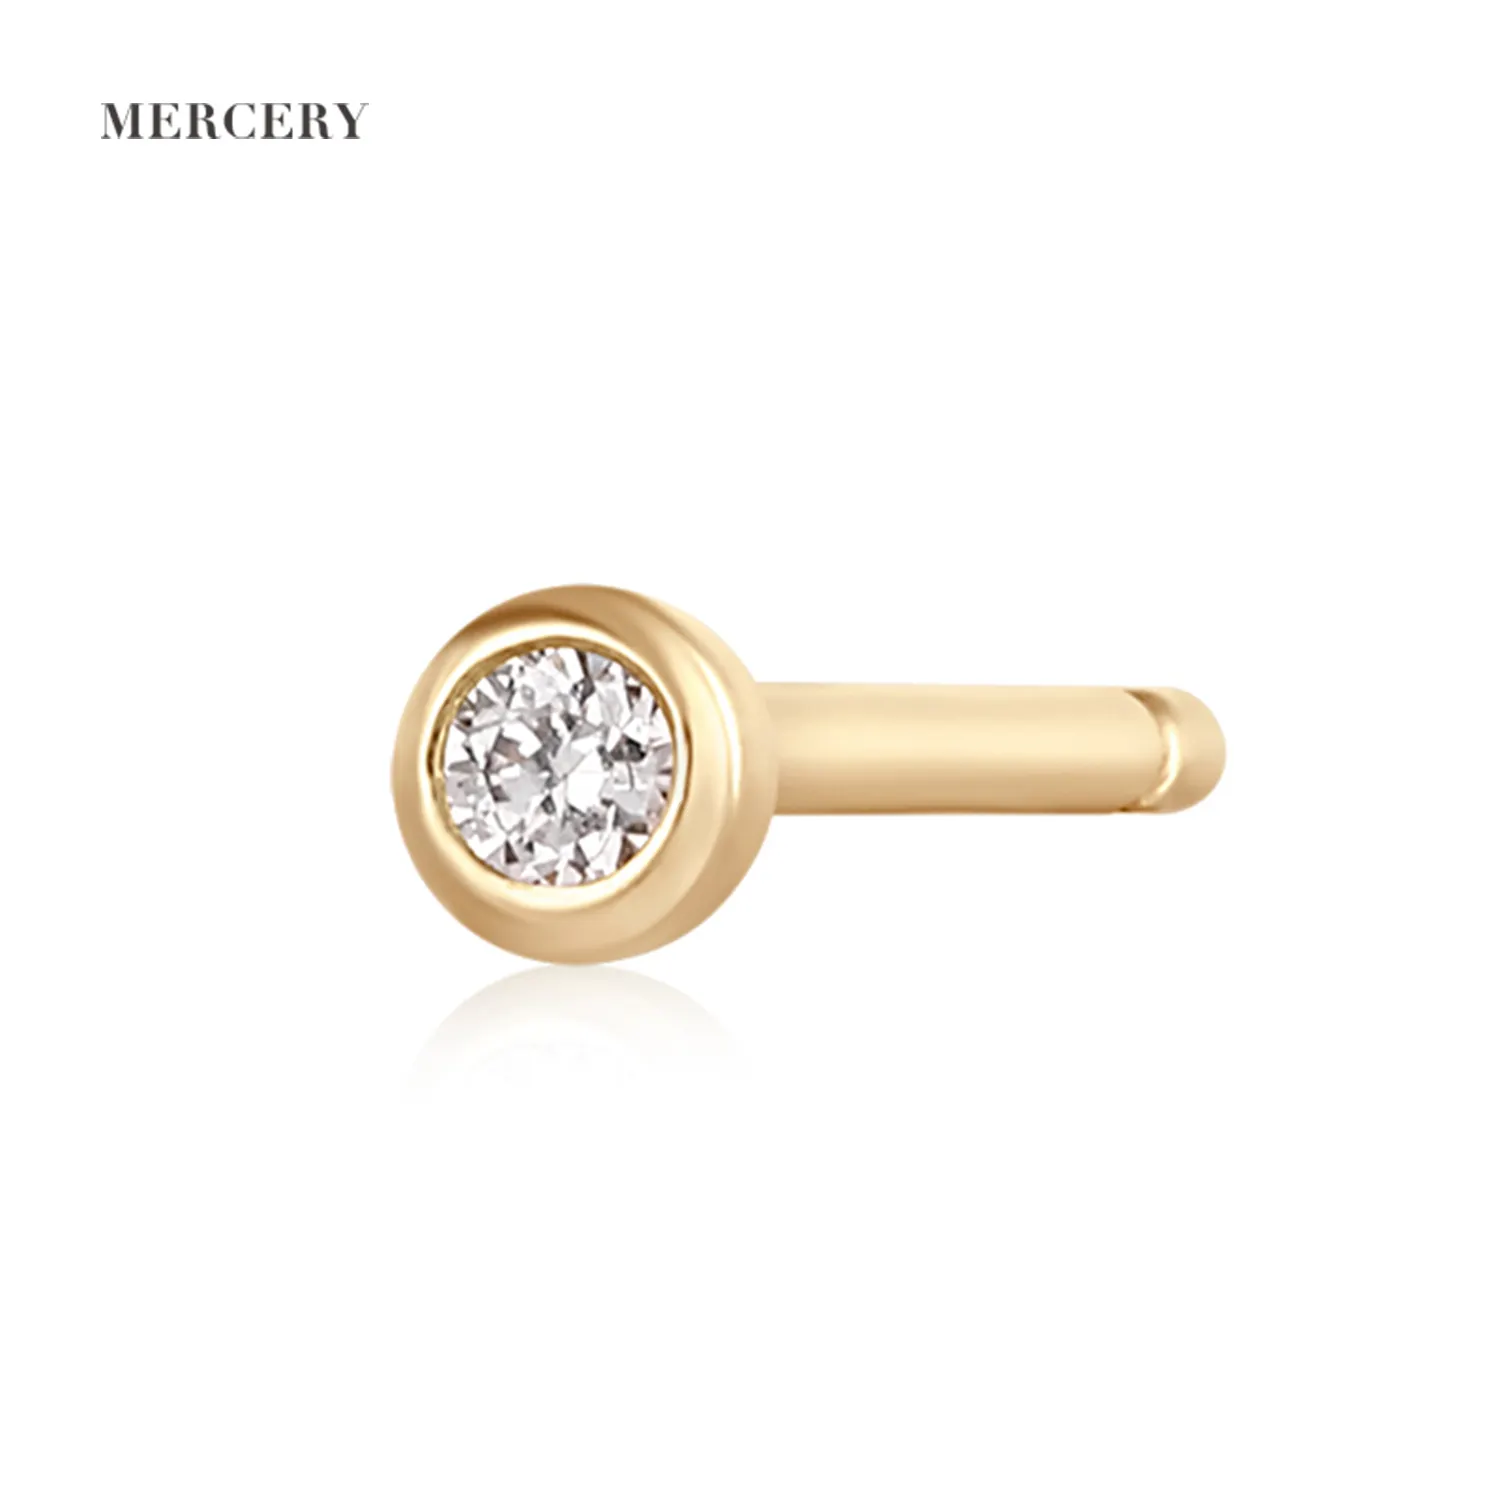 Mercery Jewelry Simple Classic Jewellery Women Golden Shiny Round Diamond 14K Solid Gold Stud Earrings